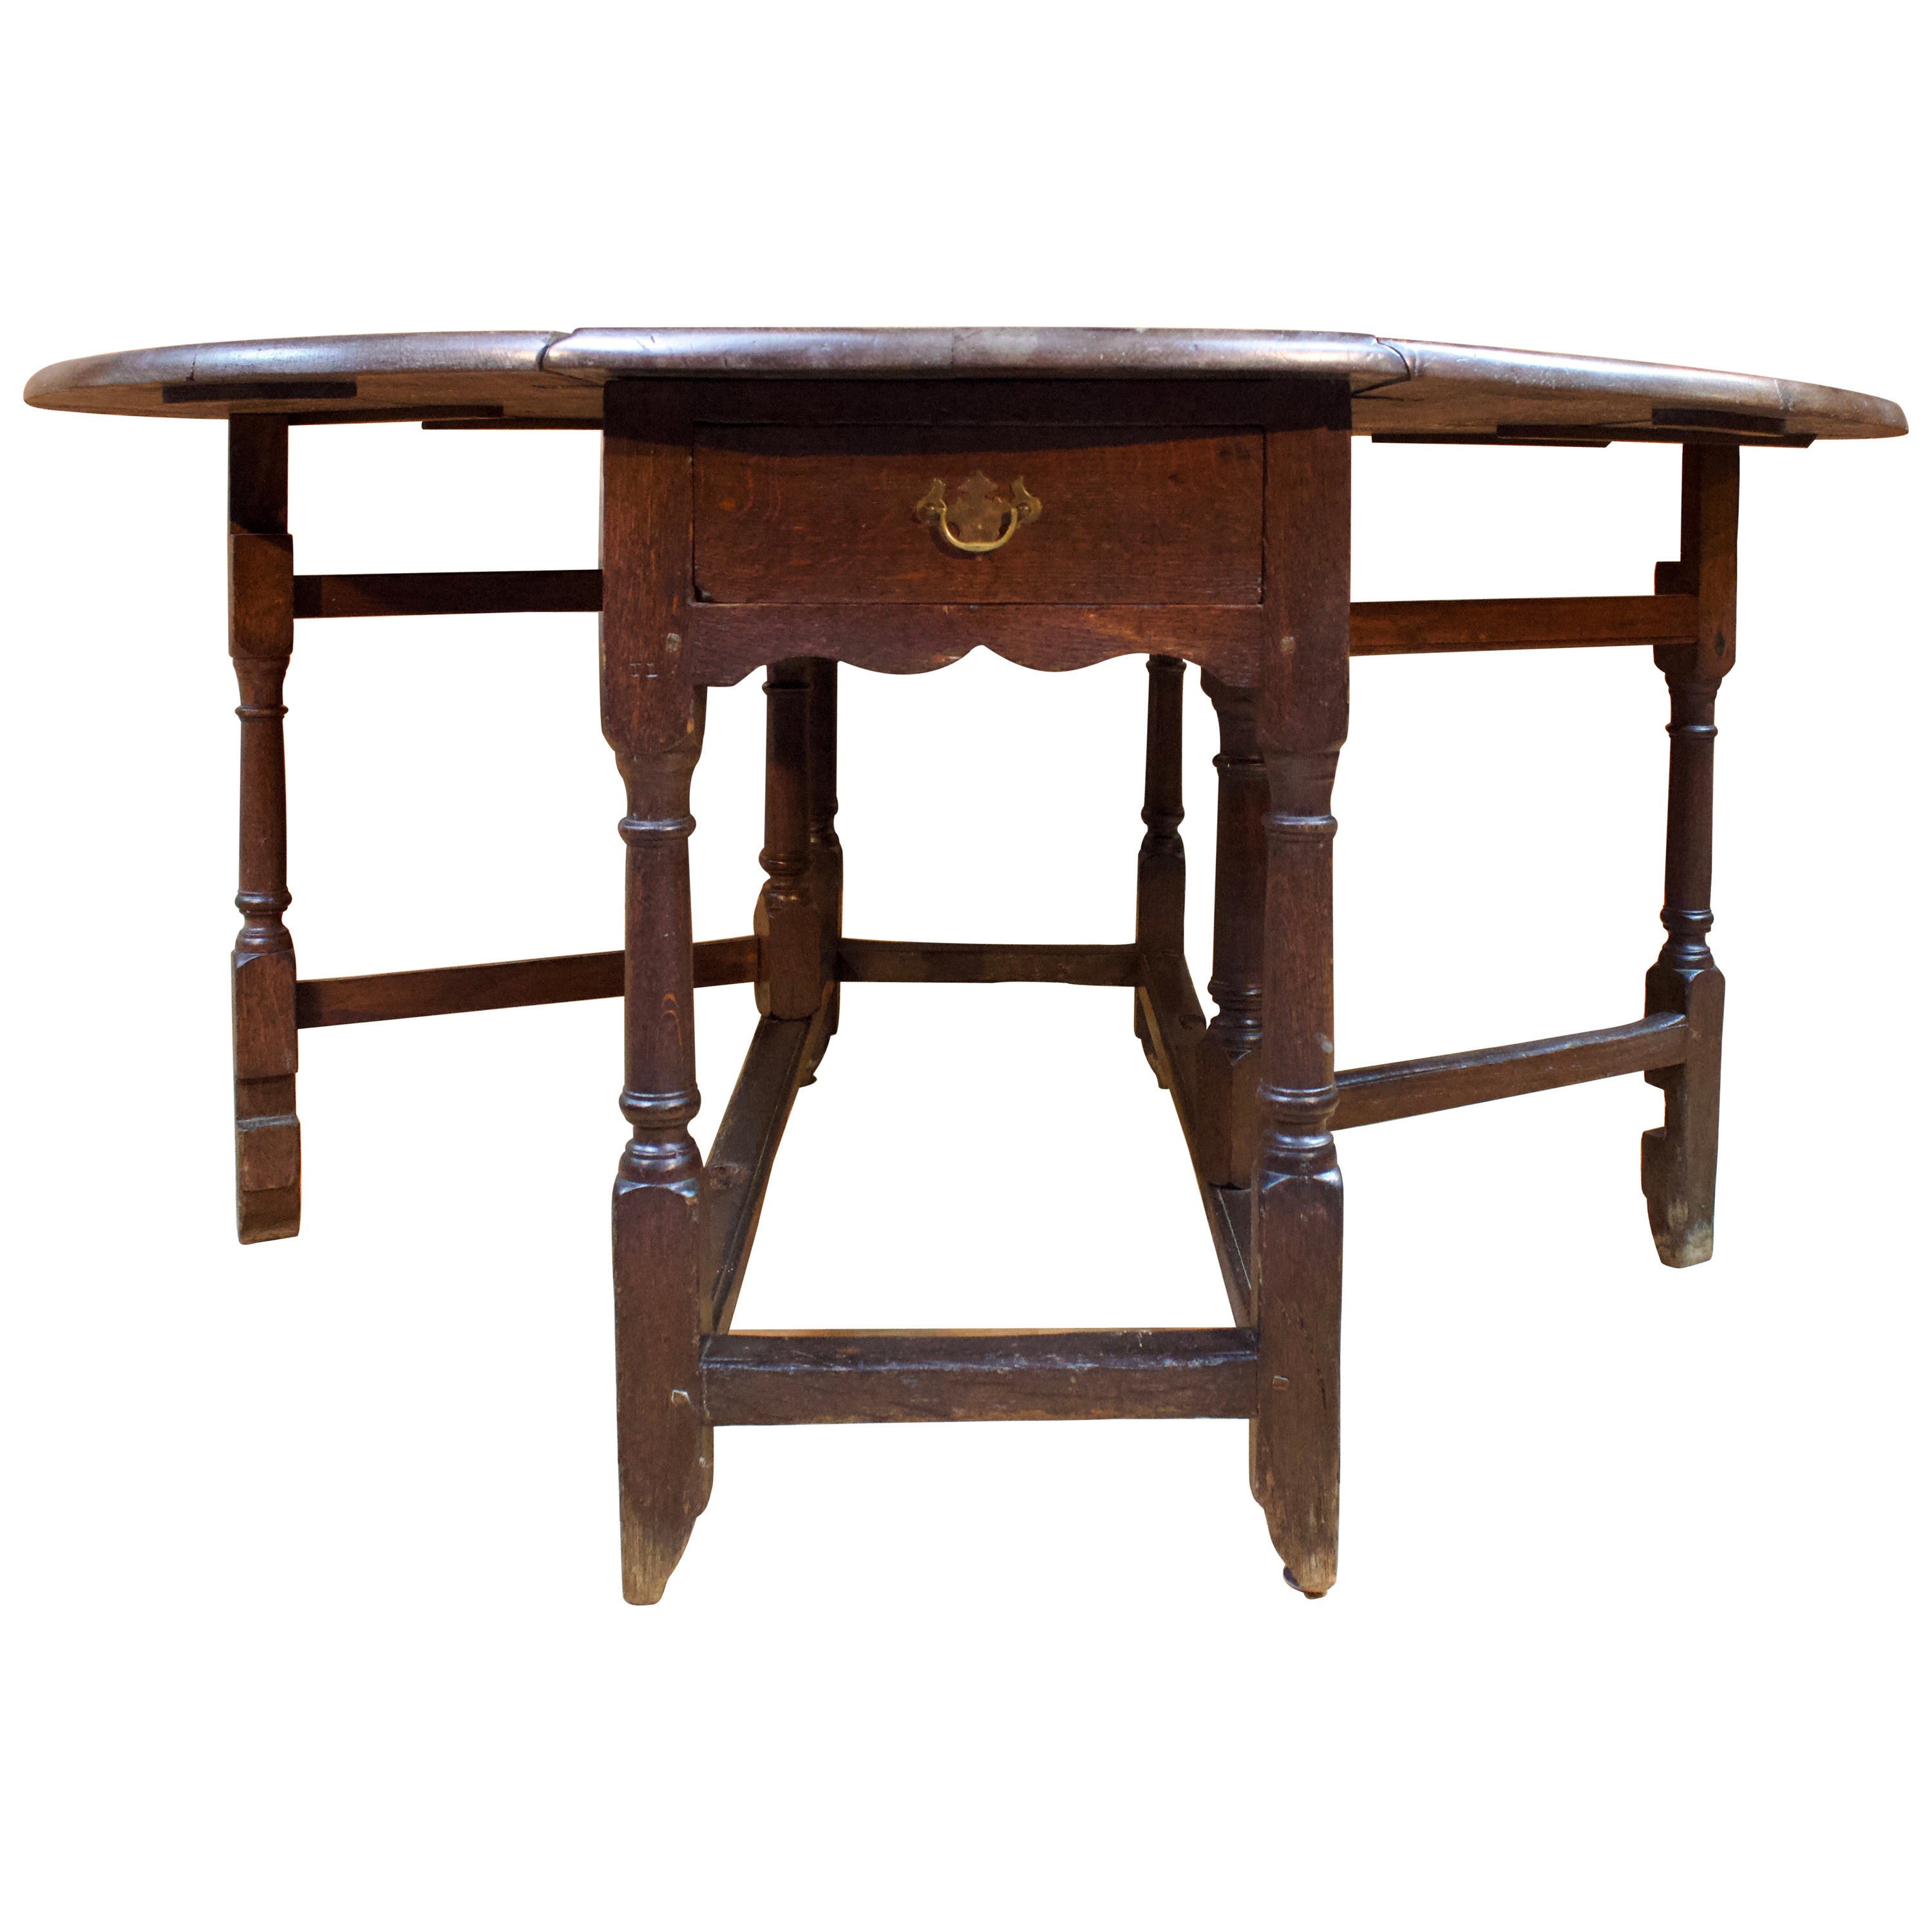 English Gate-leg Table Folding in Oak Wood - 18th Century - England  For Sale